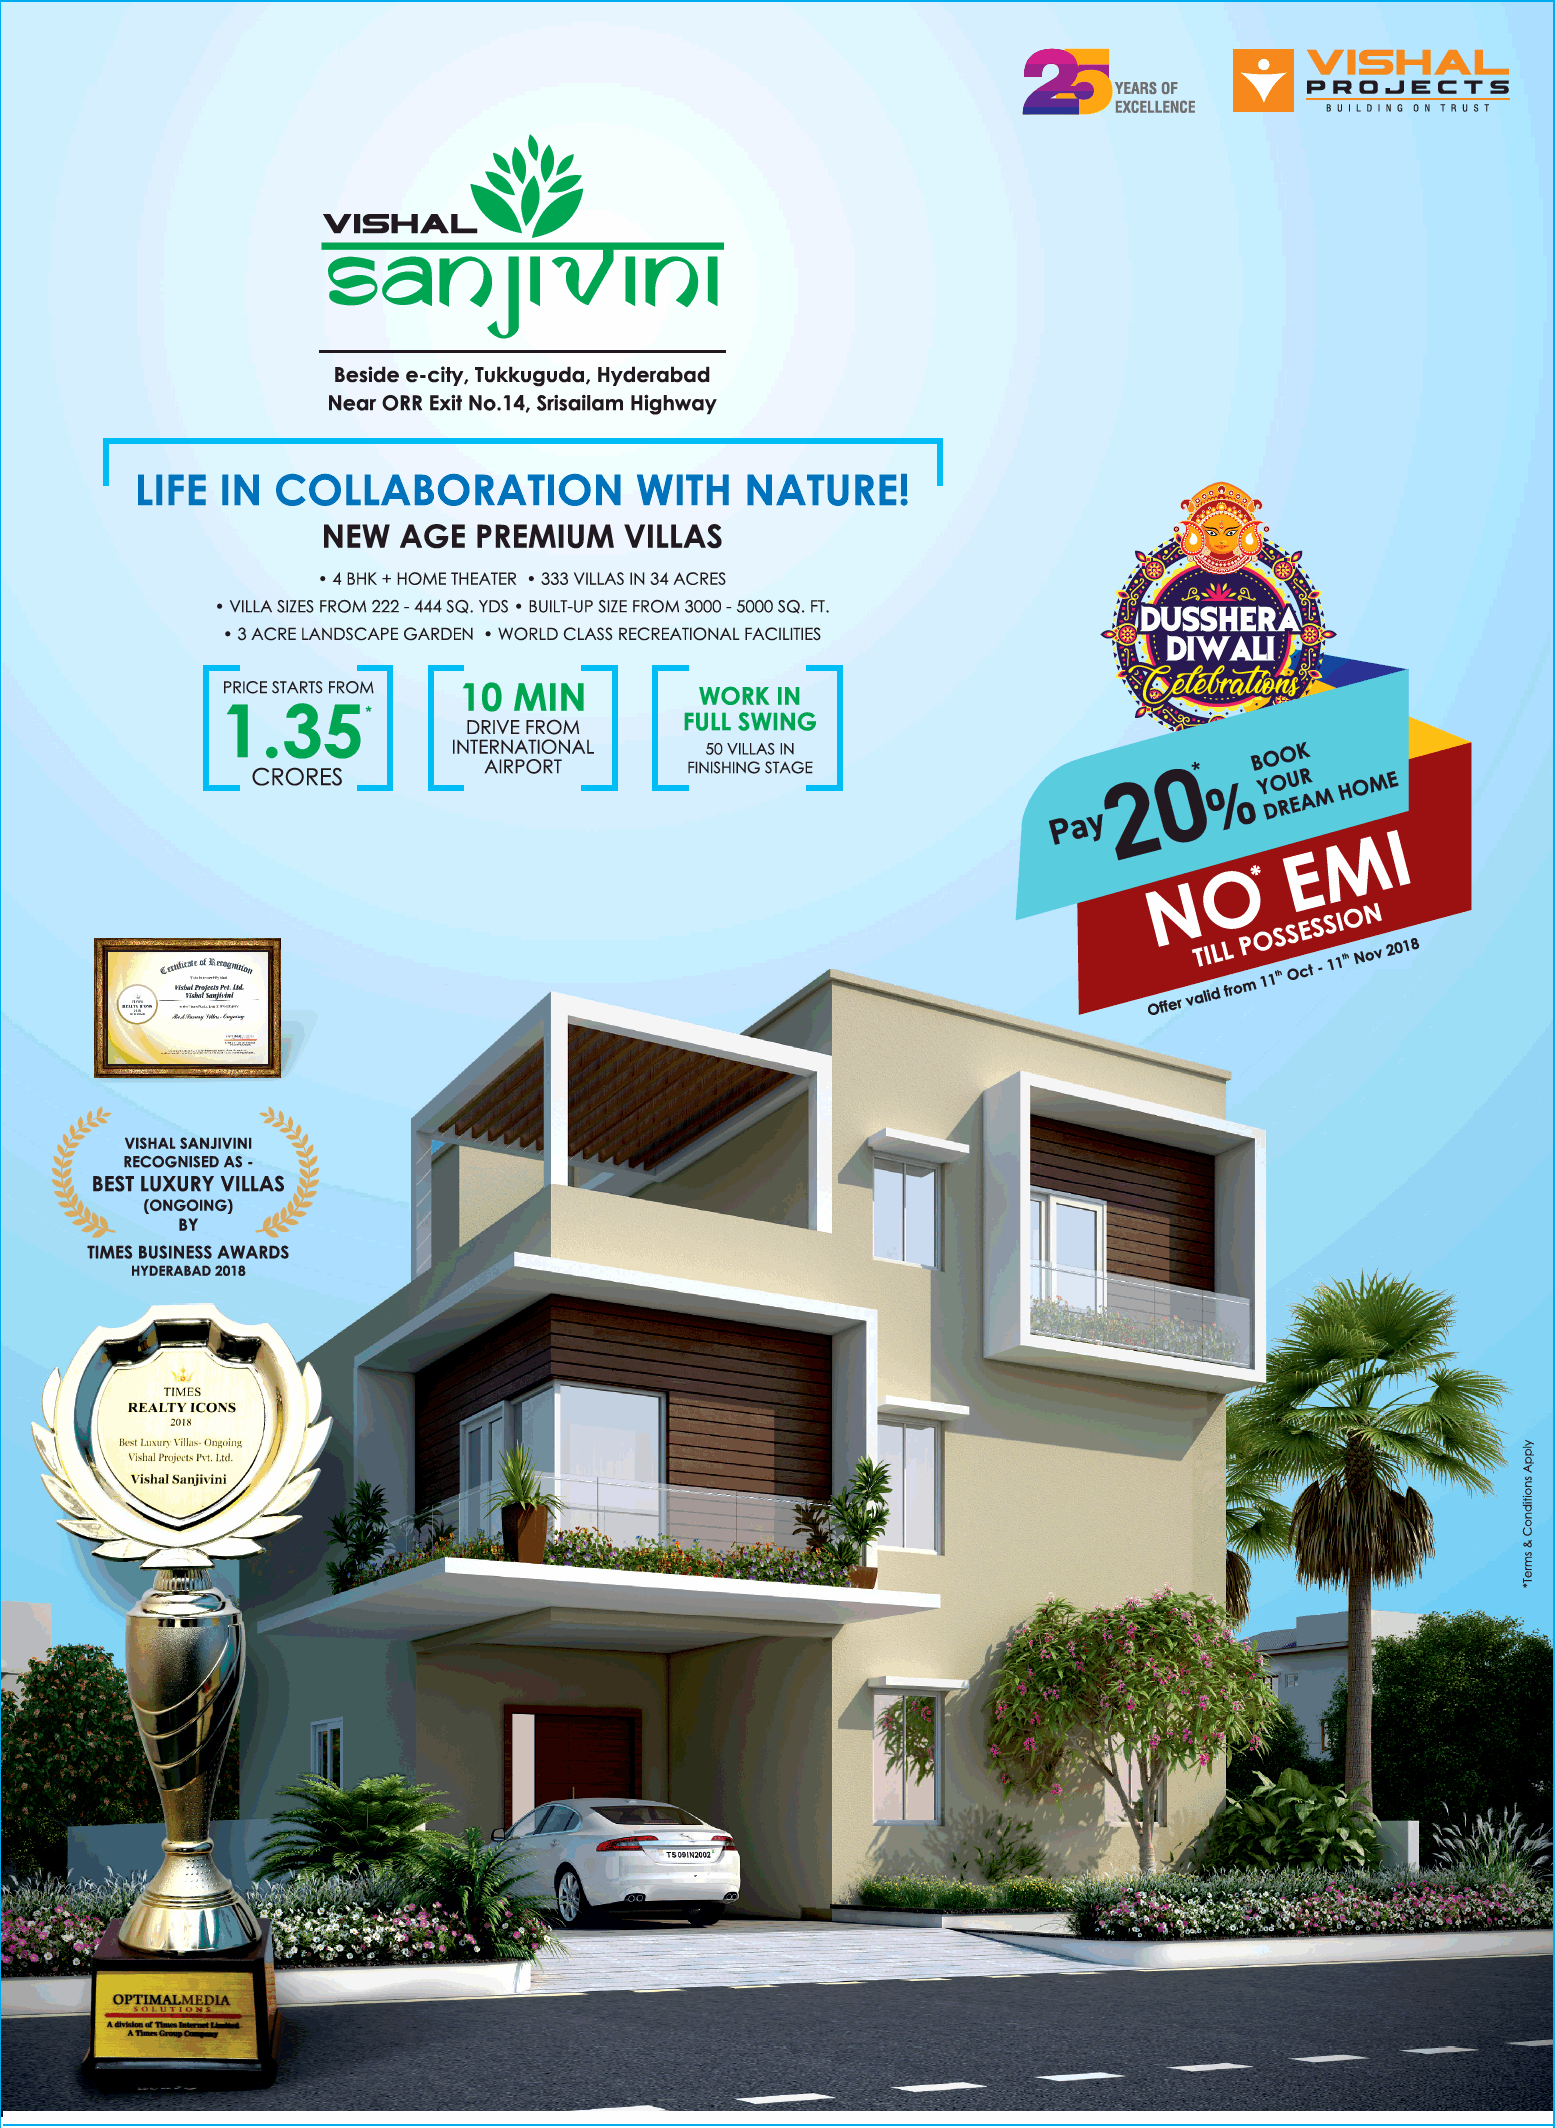 Avail new age of premium villas at Vishal Sanjivini in Hyderabad